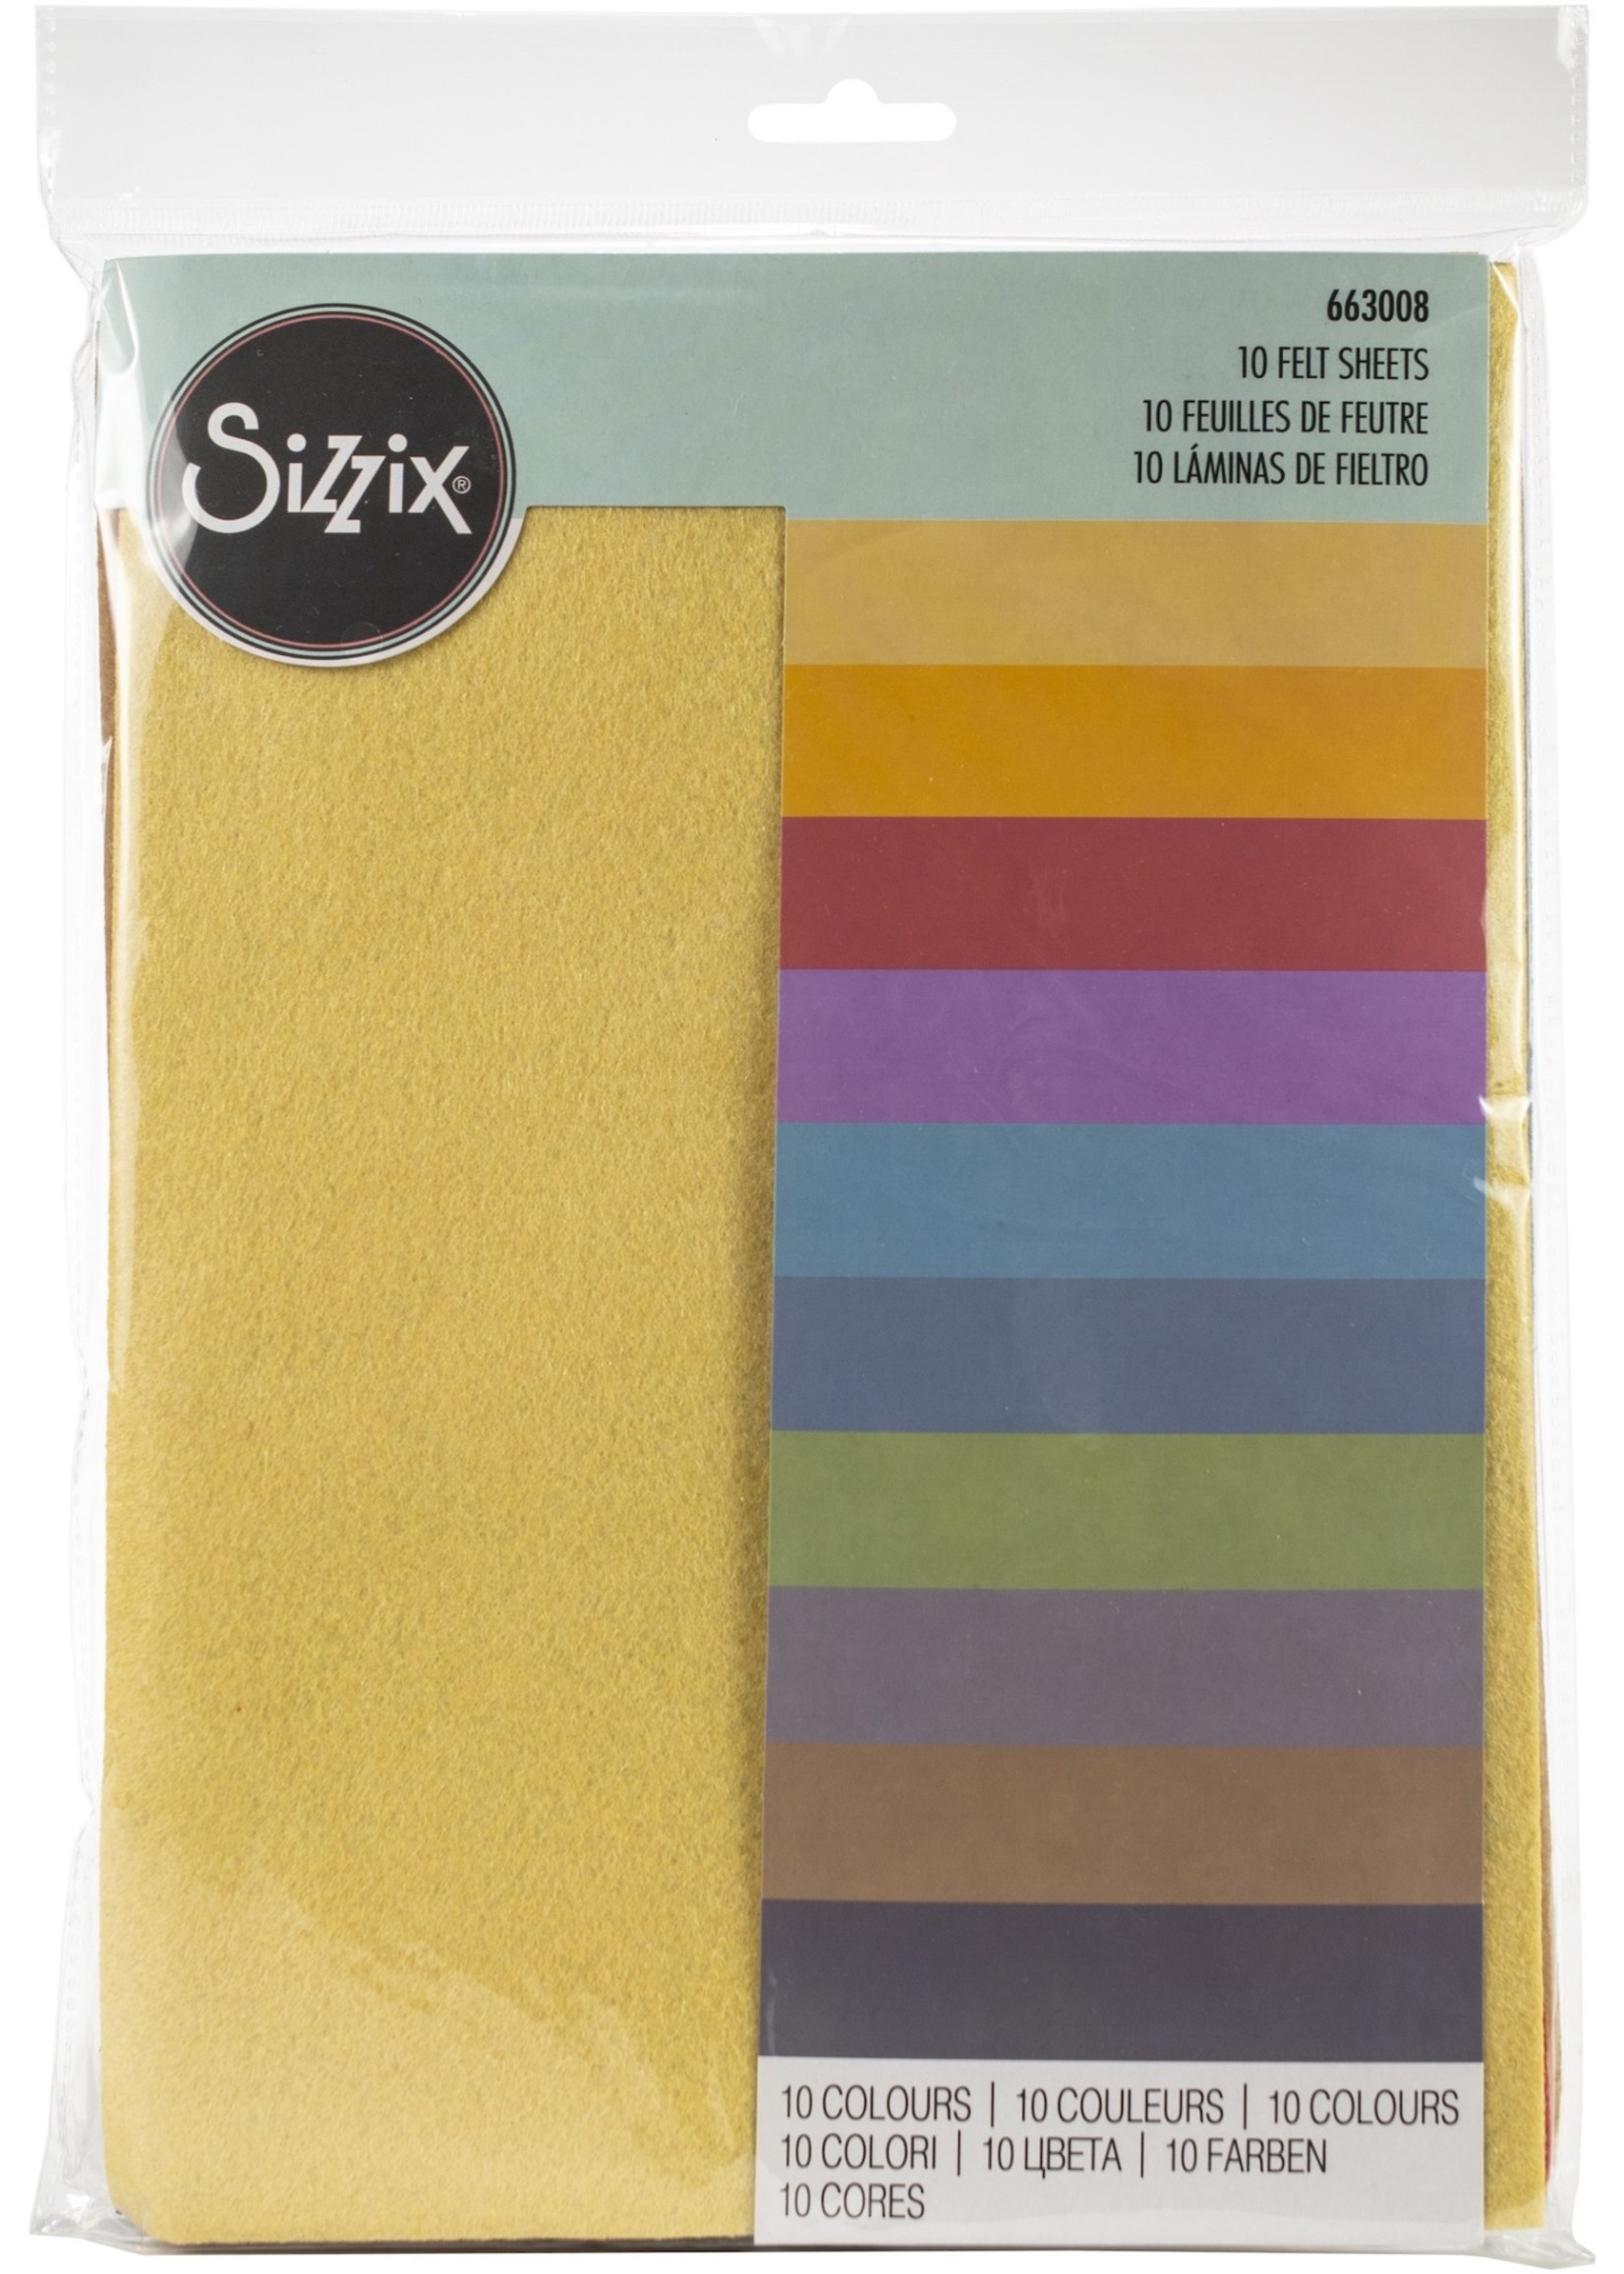 Sizzix Felt Sheets Bold Pack